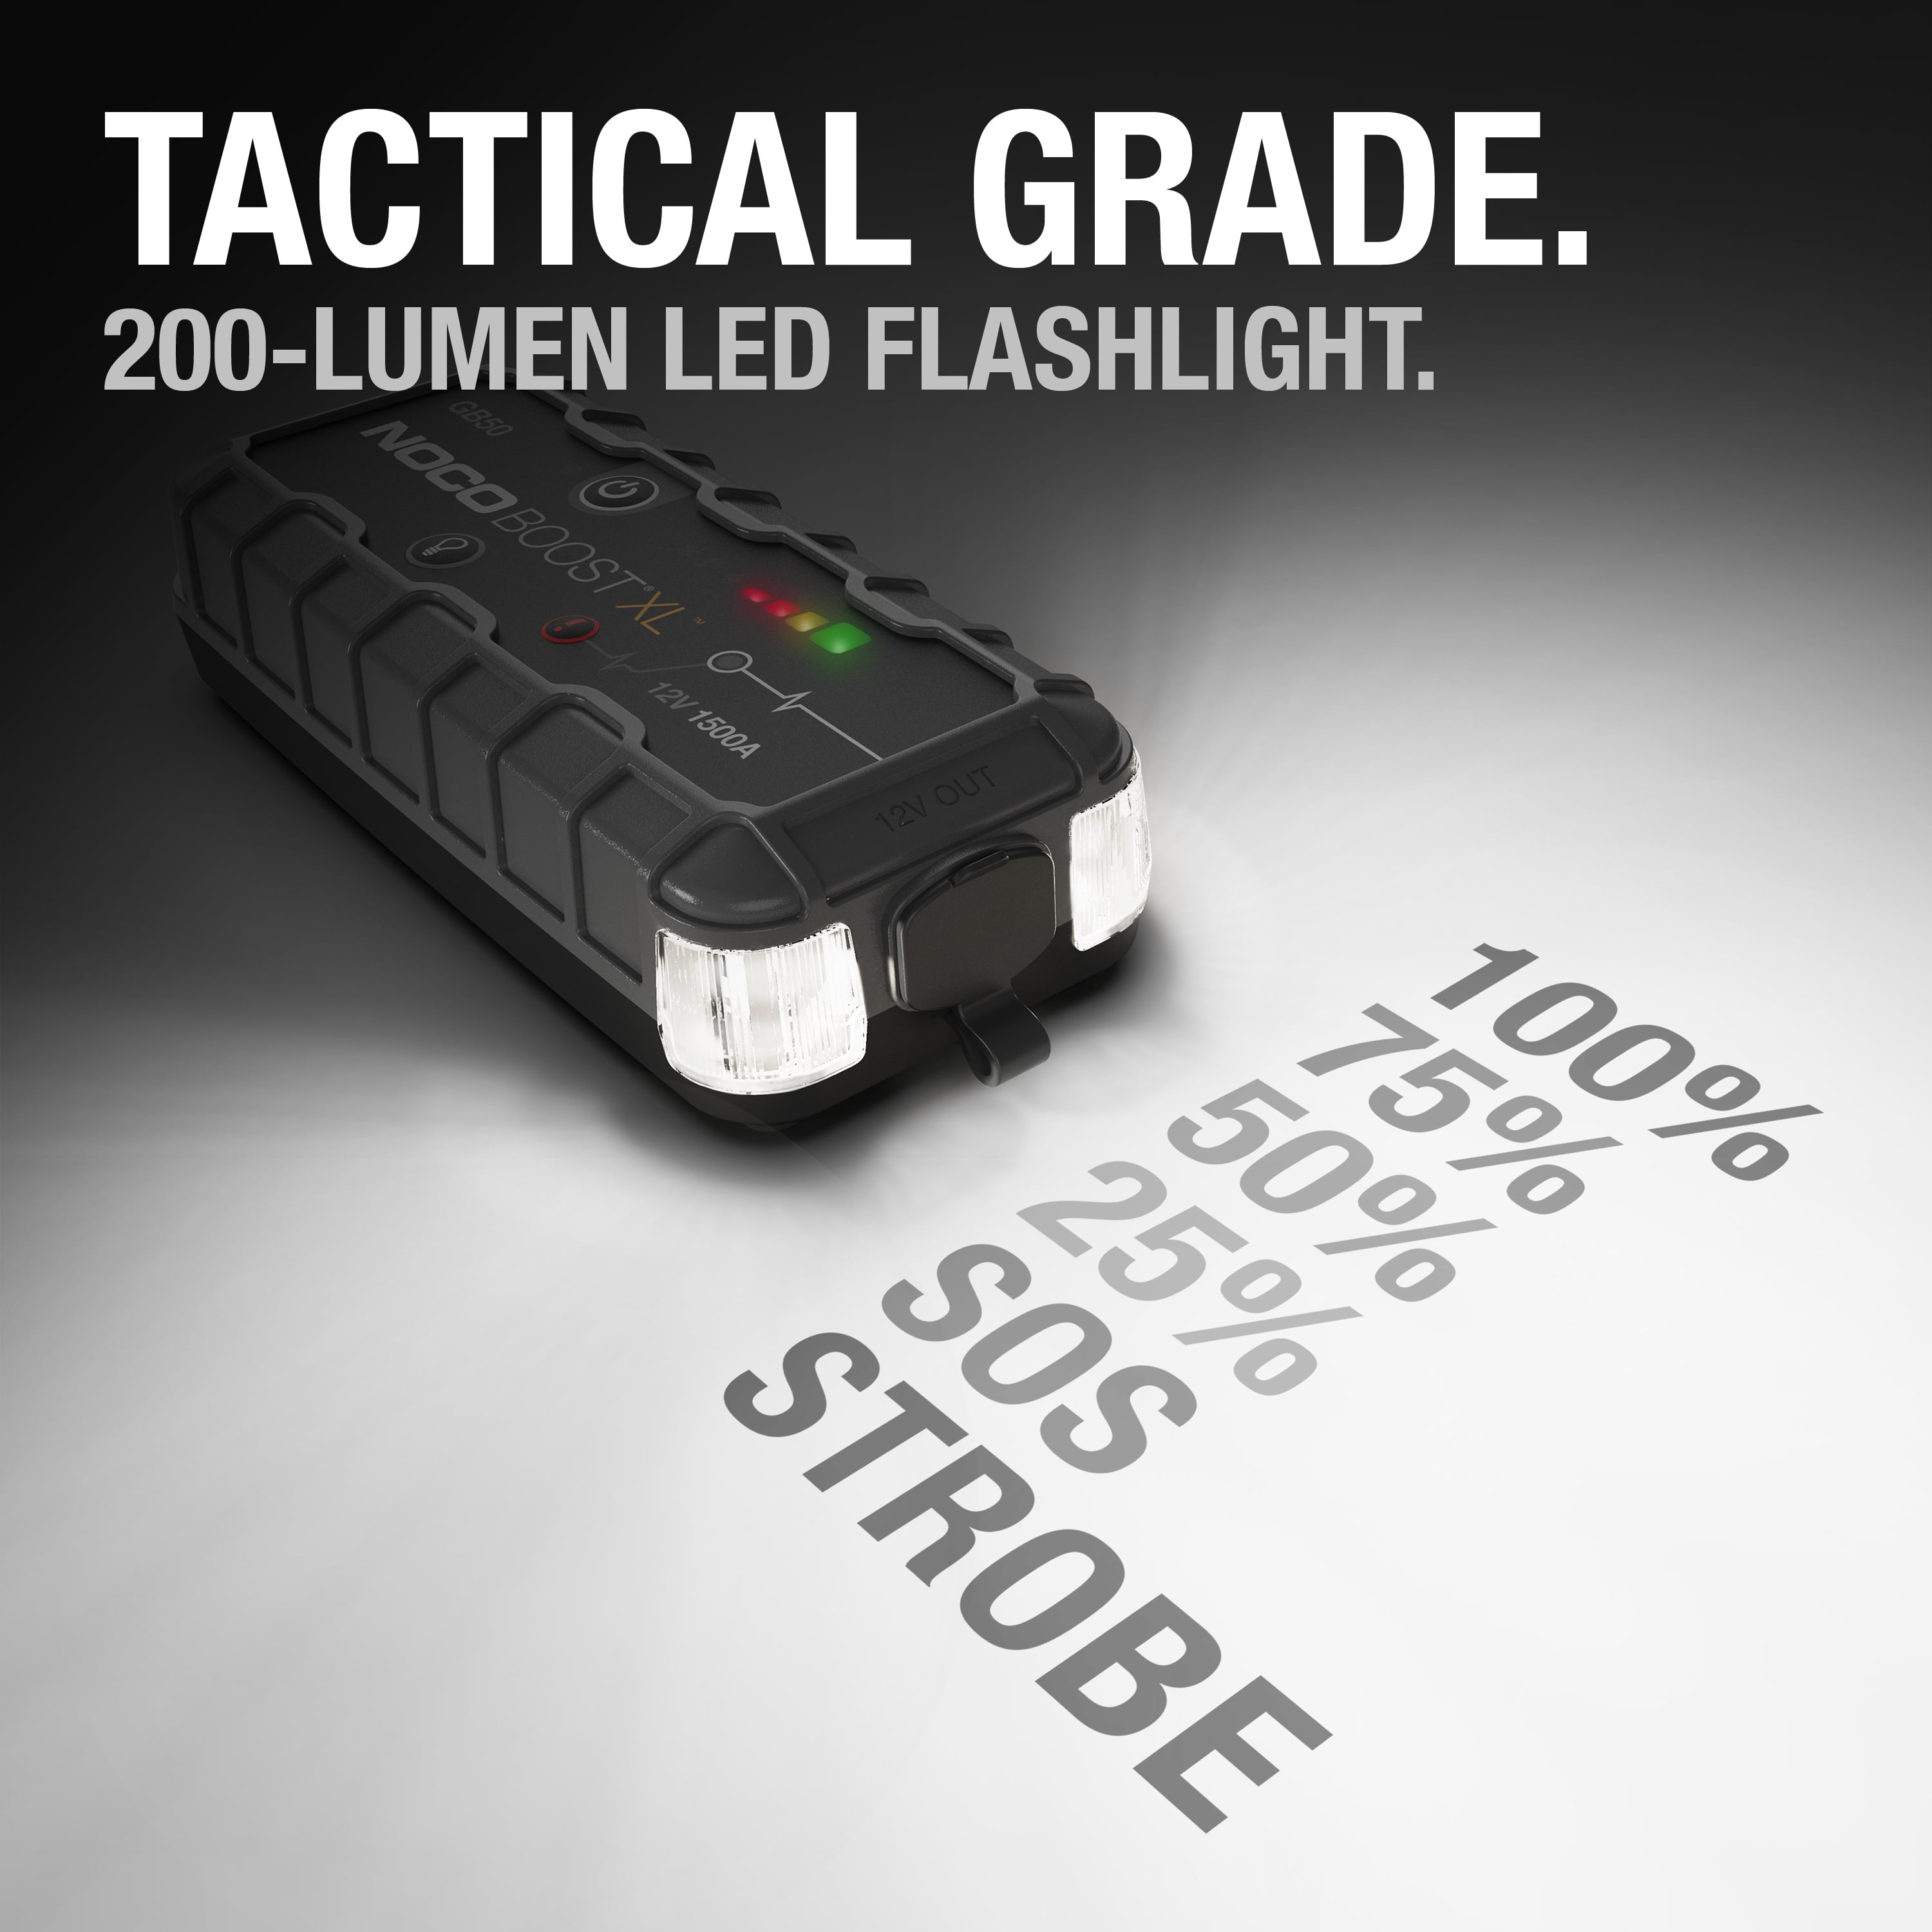 GB50 Boost XL 1500A UltraSafe Lithium Jump Starter - Noco Genius